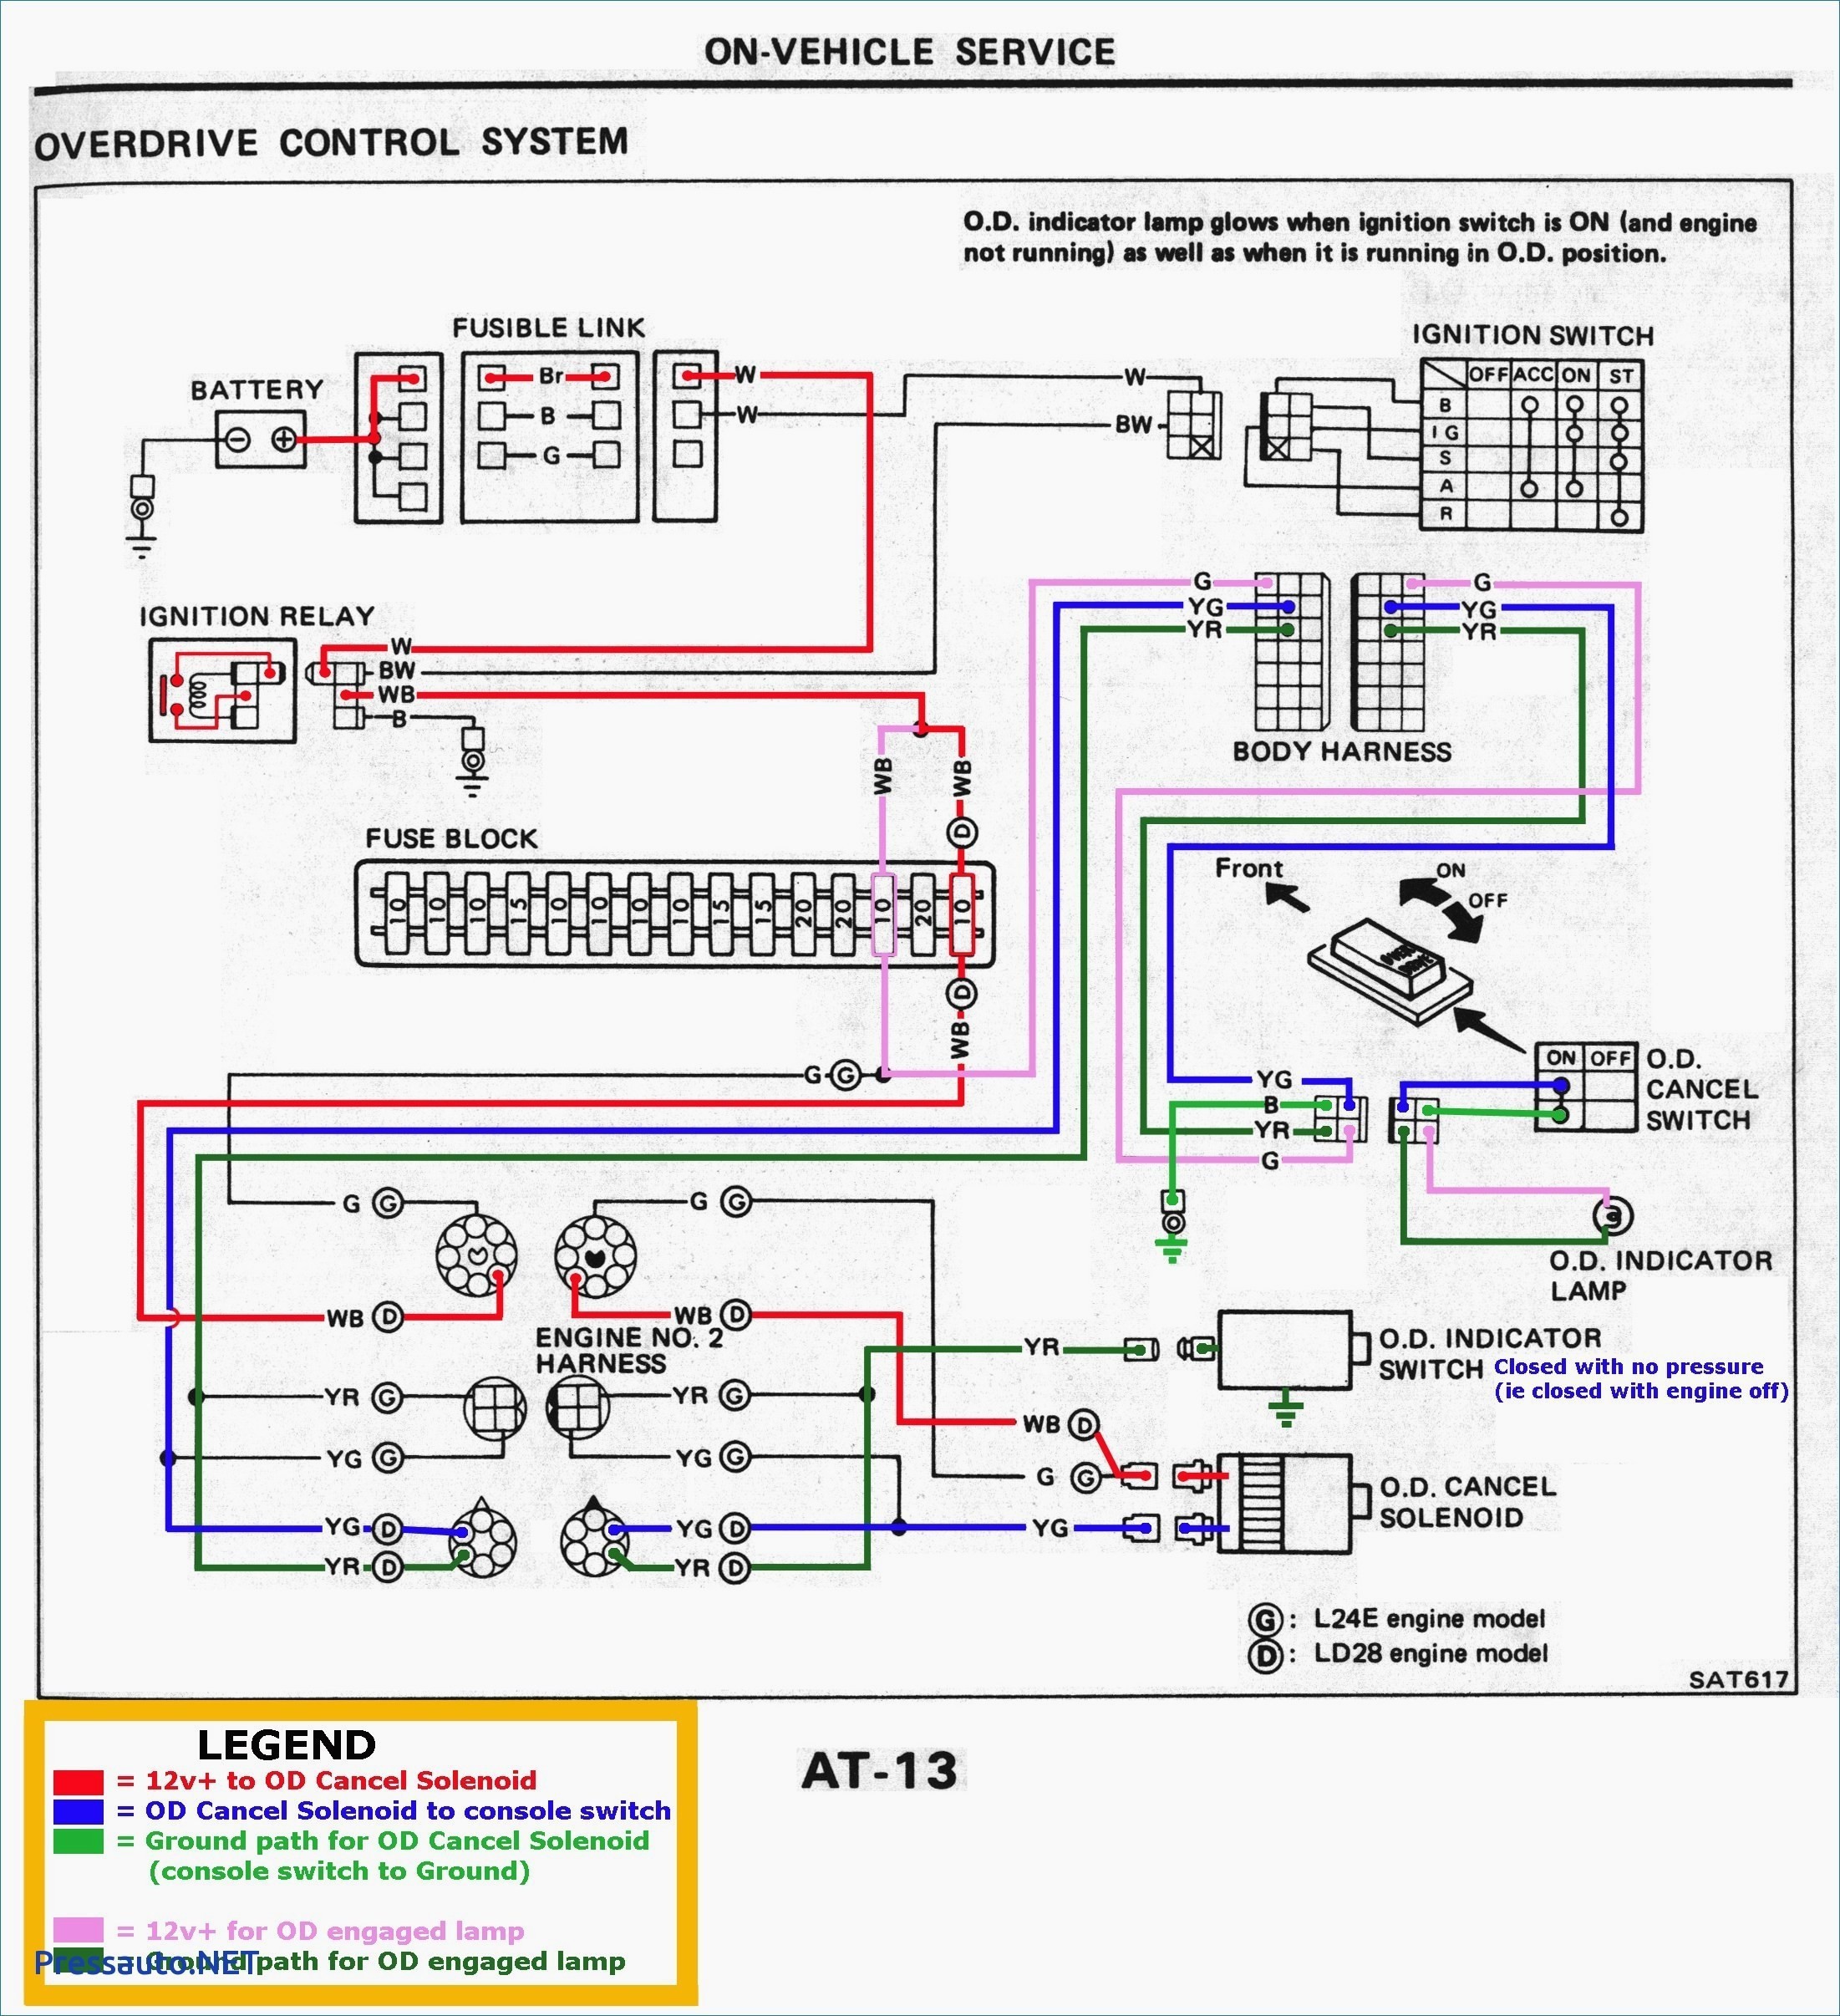 Fujitsu Ten Car Audio Wiring Diagram Fujitsu Inverter Wiring Diagram New Fujitsu Ten Car Audio Wiring Of Fujitsu Ten Car Audio Wiring Diagram